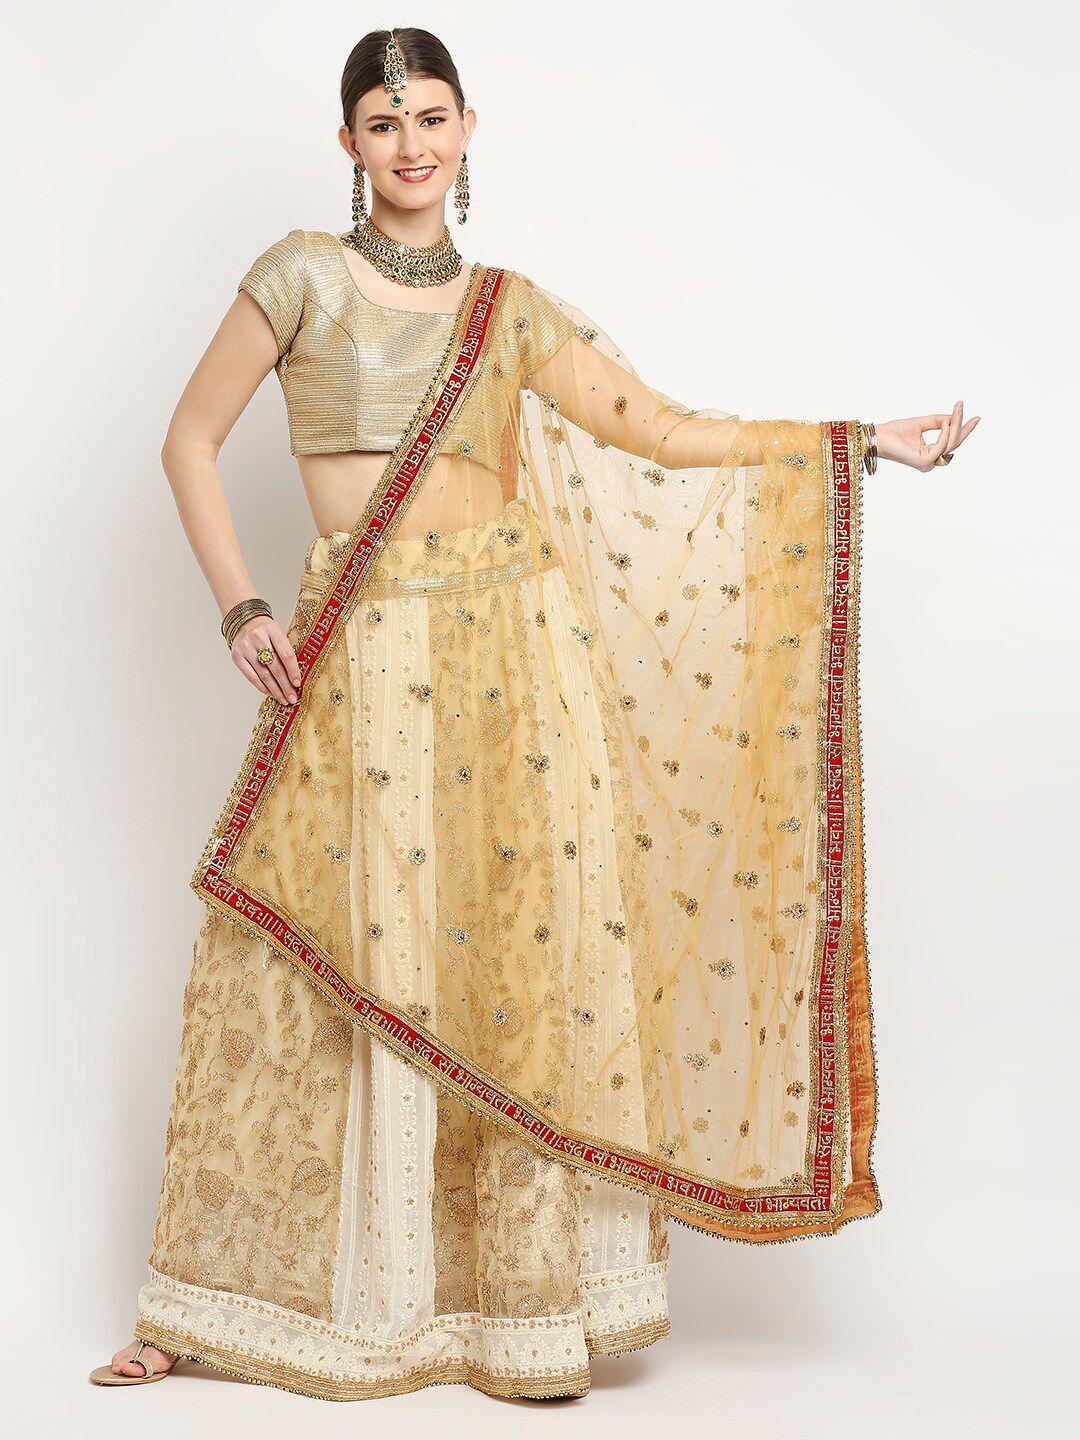 dupatta bazaar gold-toned & red ethnic motifs embroidered dupatta with zardozi